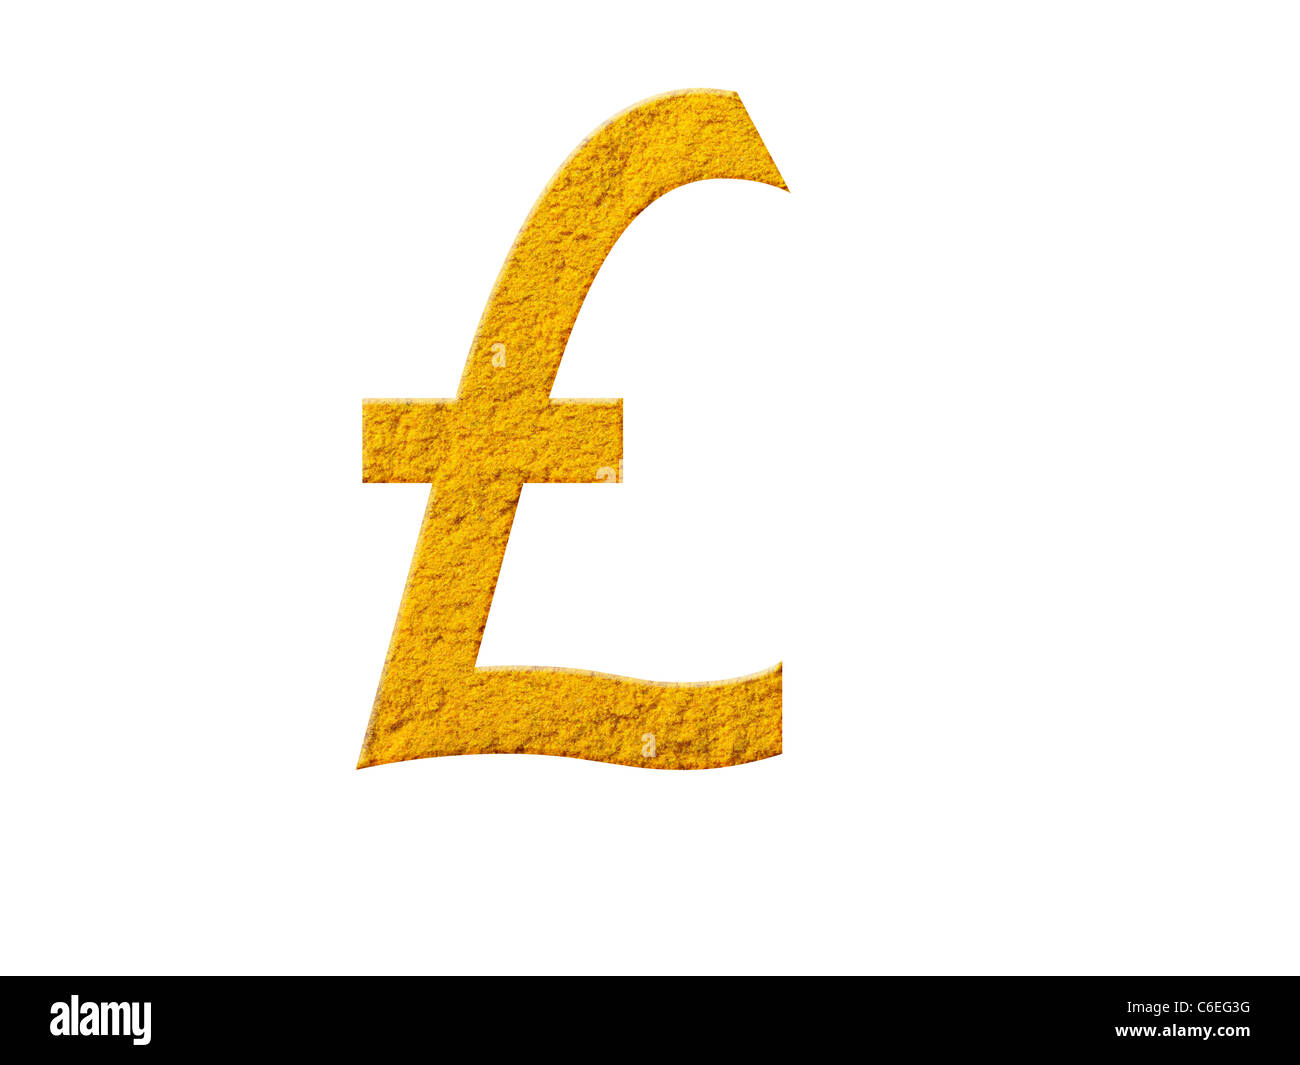 Studio shot of Mustard Powder making British Pound Sign on white background Stock Photo